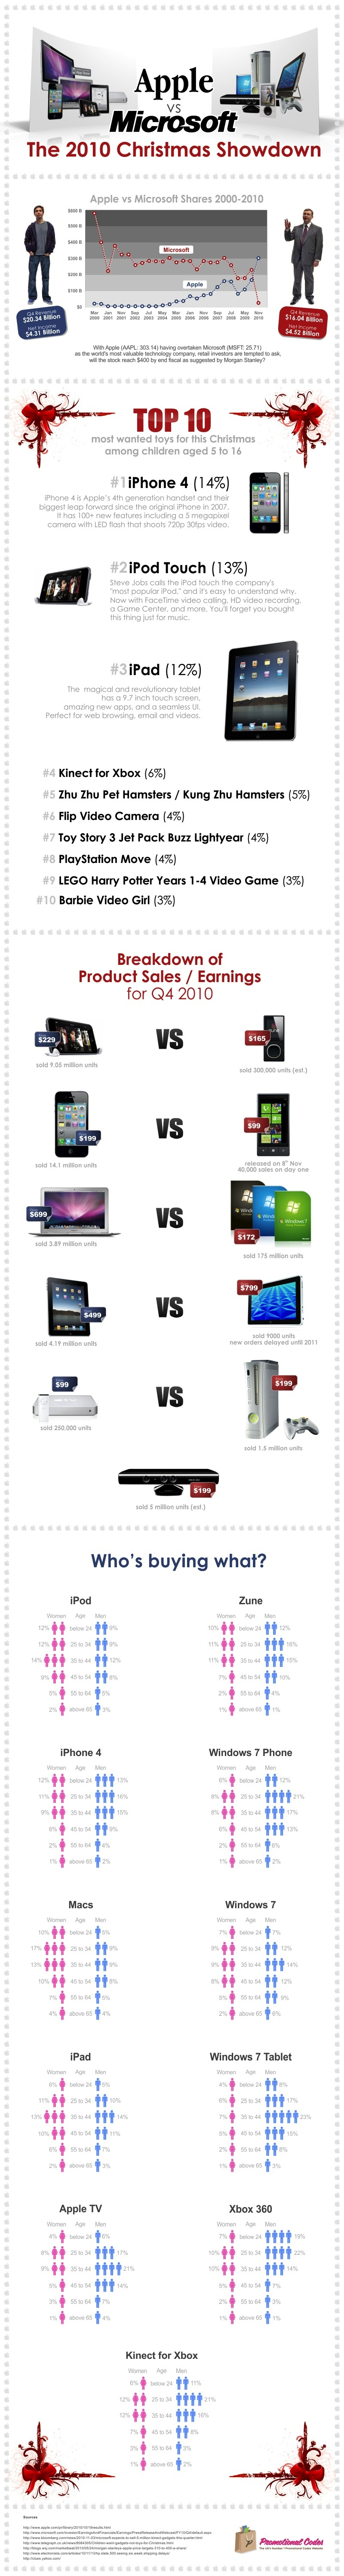 Apple vs Microsoft 2010 Christmas Sales Showdown